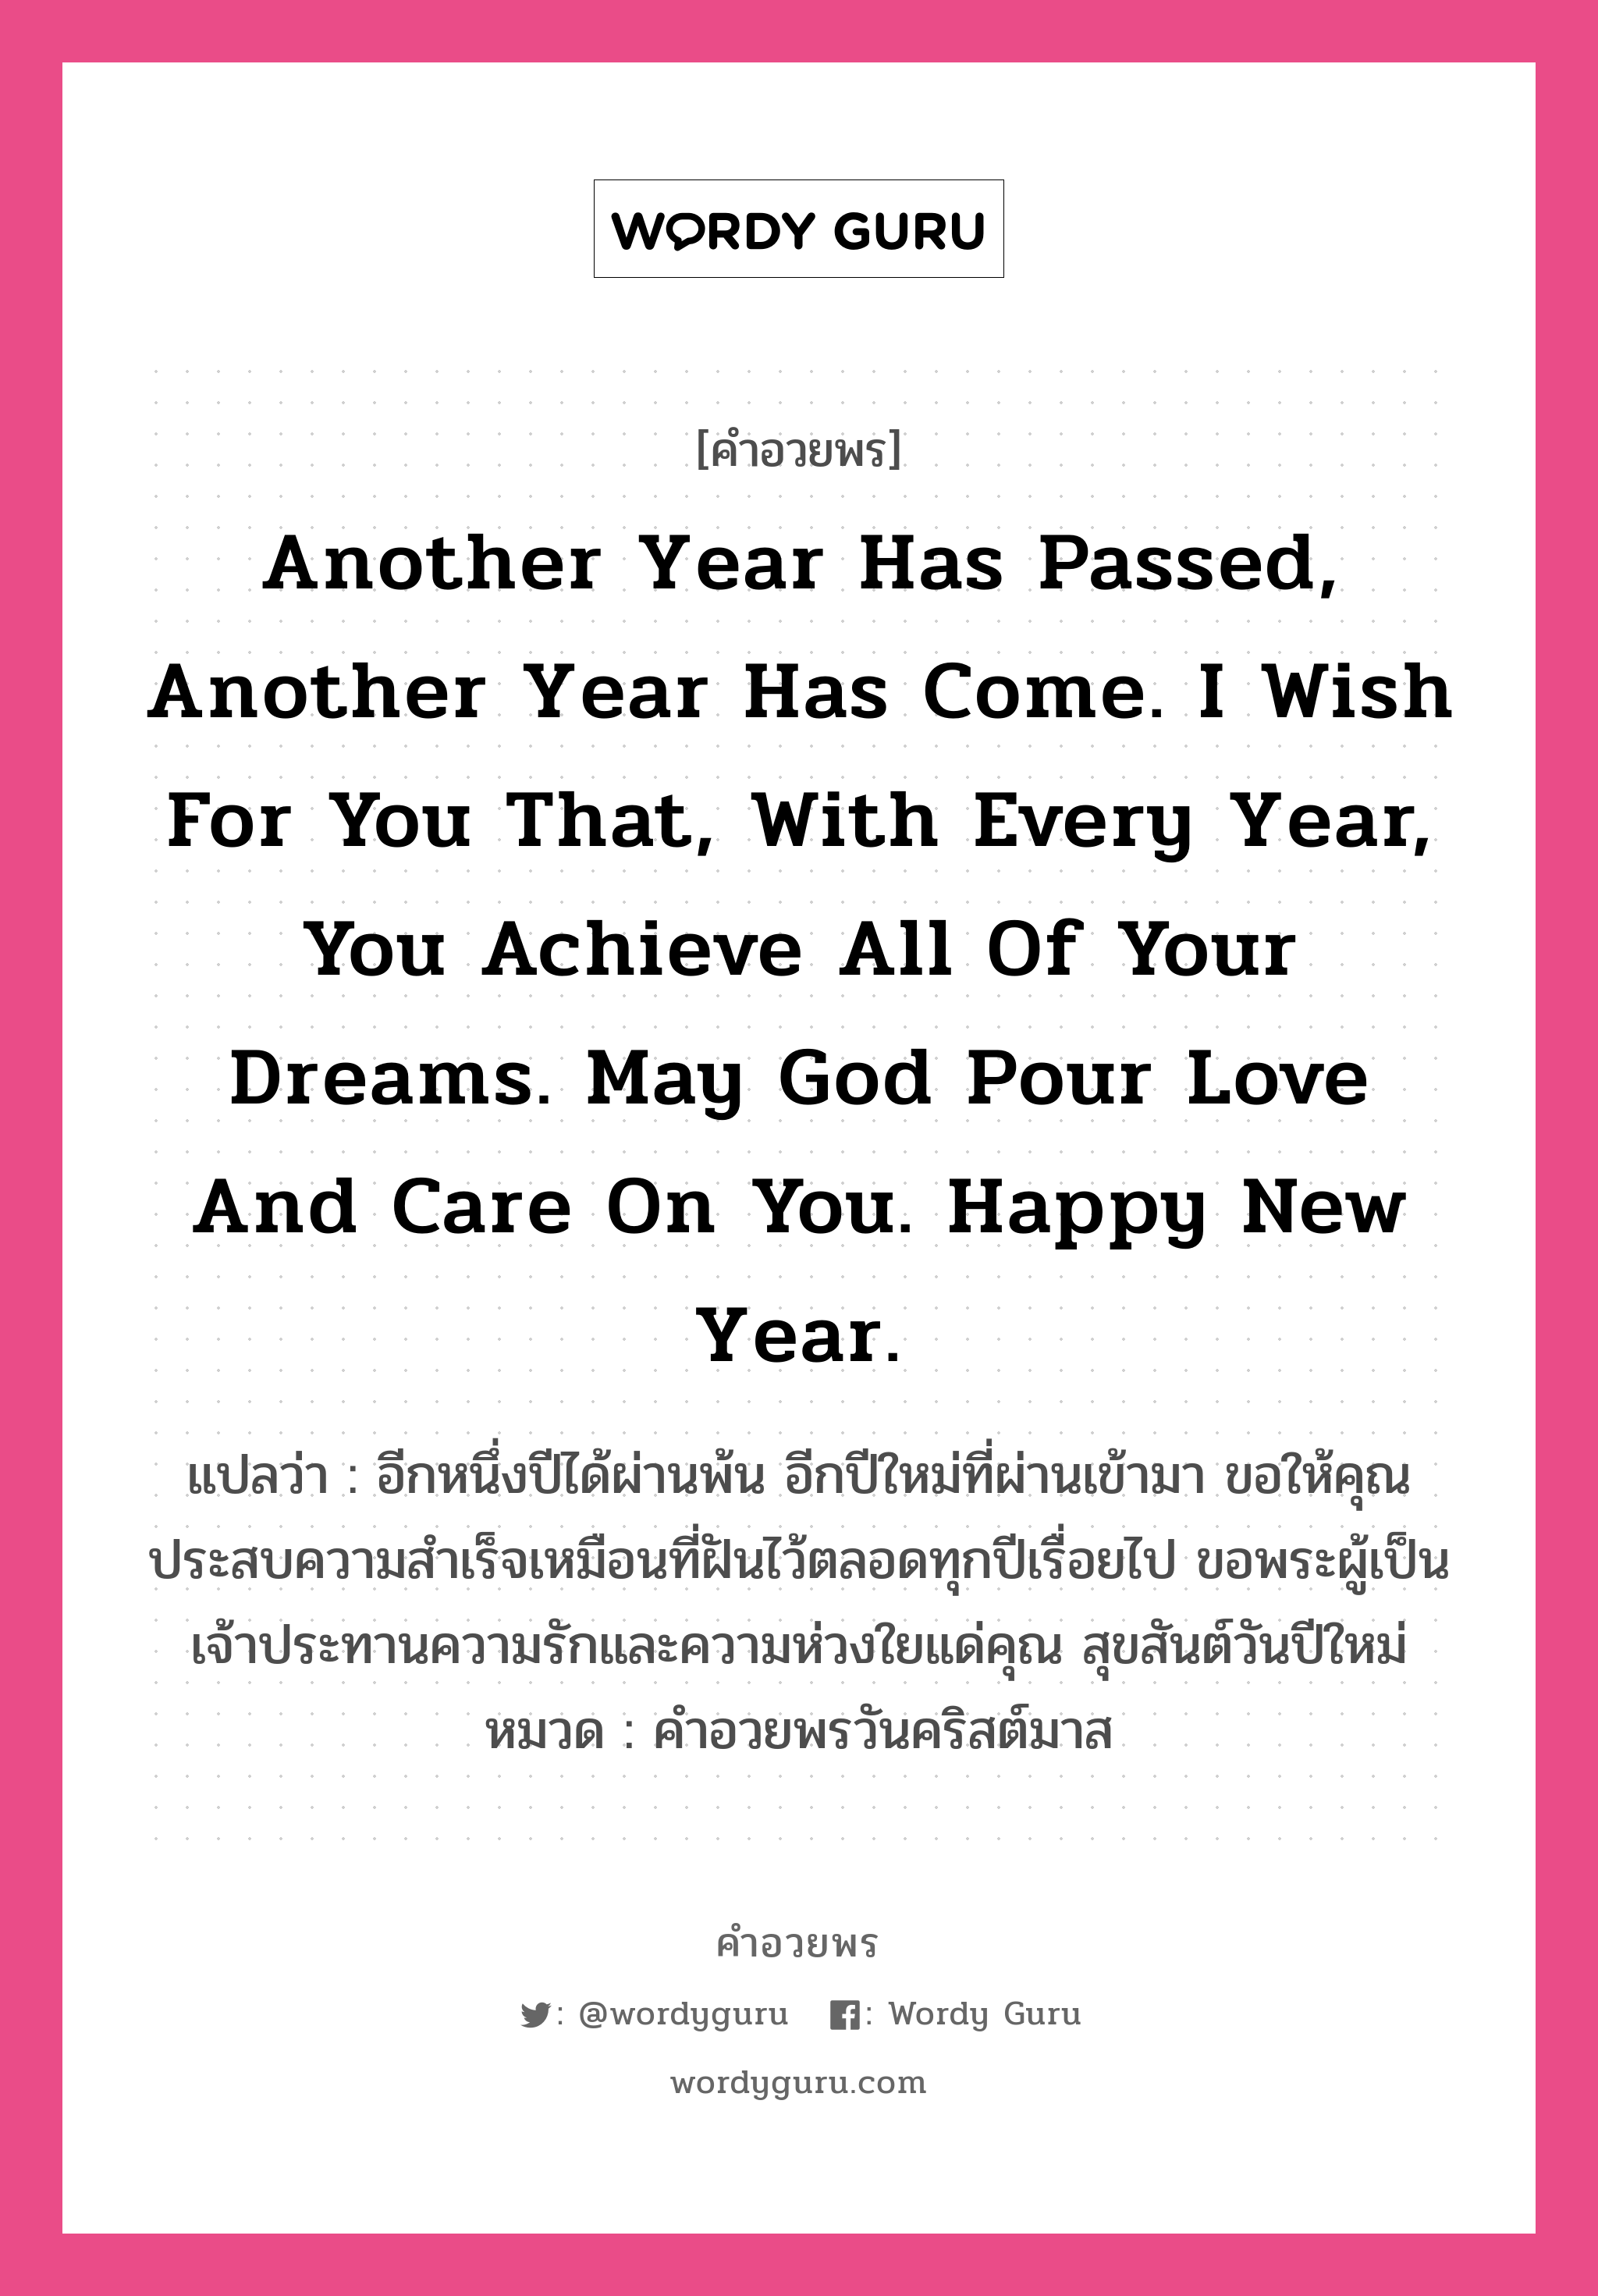 Another year has passed, another year has come. I wish for you that, with every year, you achieve all of your dreams. May God pour love and care on you. Happy New Year. คำศัพท์ในกลุ่มประเภท คำอวยพรวันคริสต์มาส, แปลว่า อีกหนึ่งปีได้ผ่านพ้น อีกปีใหม่ที่ผ่านเข้ามา ขอให้คุณประสบความสำเร็จเหมือนที่ฝันไว้ตลอดทุกปีเรื่อยไป ขอพระผู้เป็นเจ้าประทานความรักและความห่วงใยแด่คุณ สุขสันต์วันปีใหม่ หมวด คำอวยพรวันคริสต์มาส หมวด คำอวยพรวันคริสต์มาส